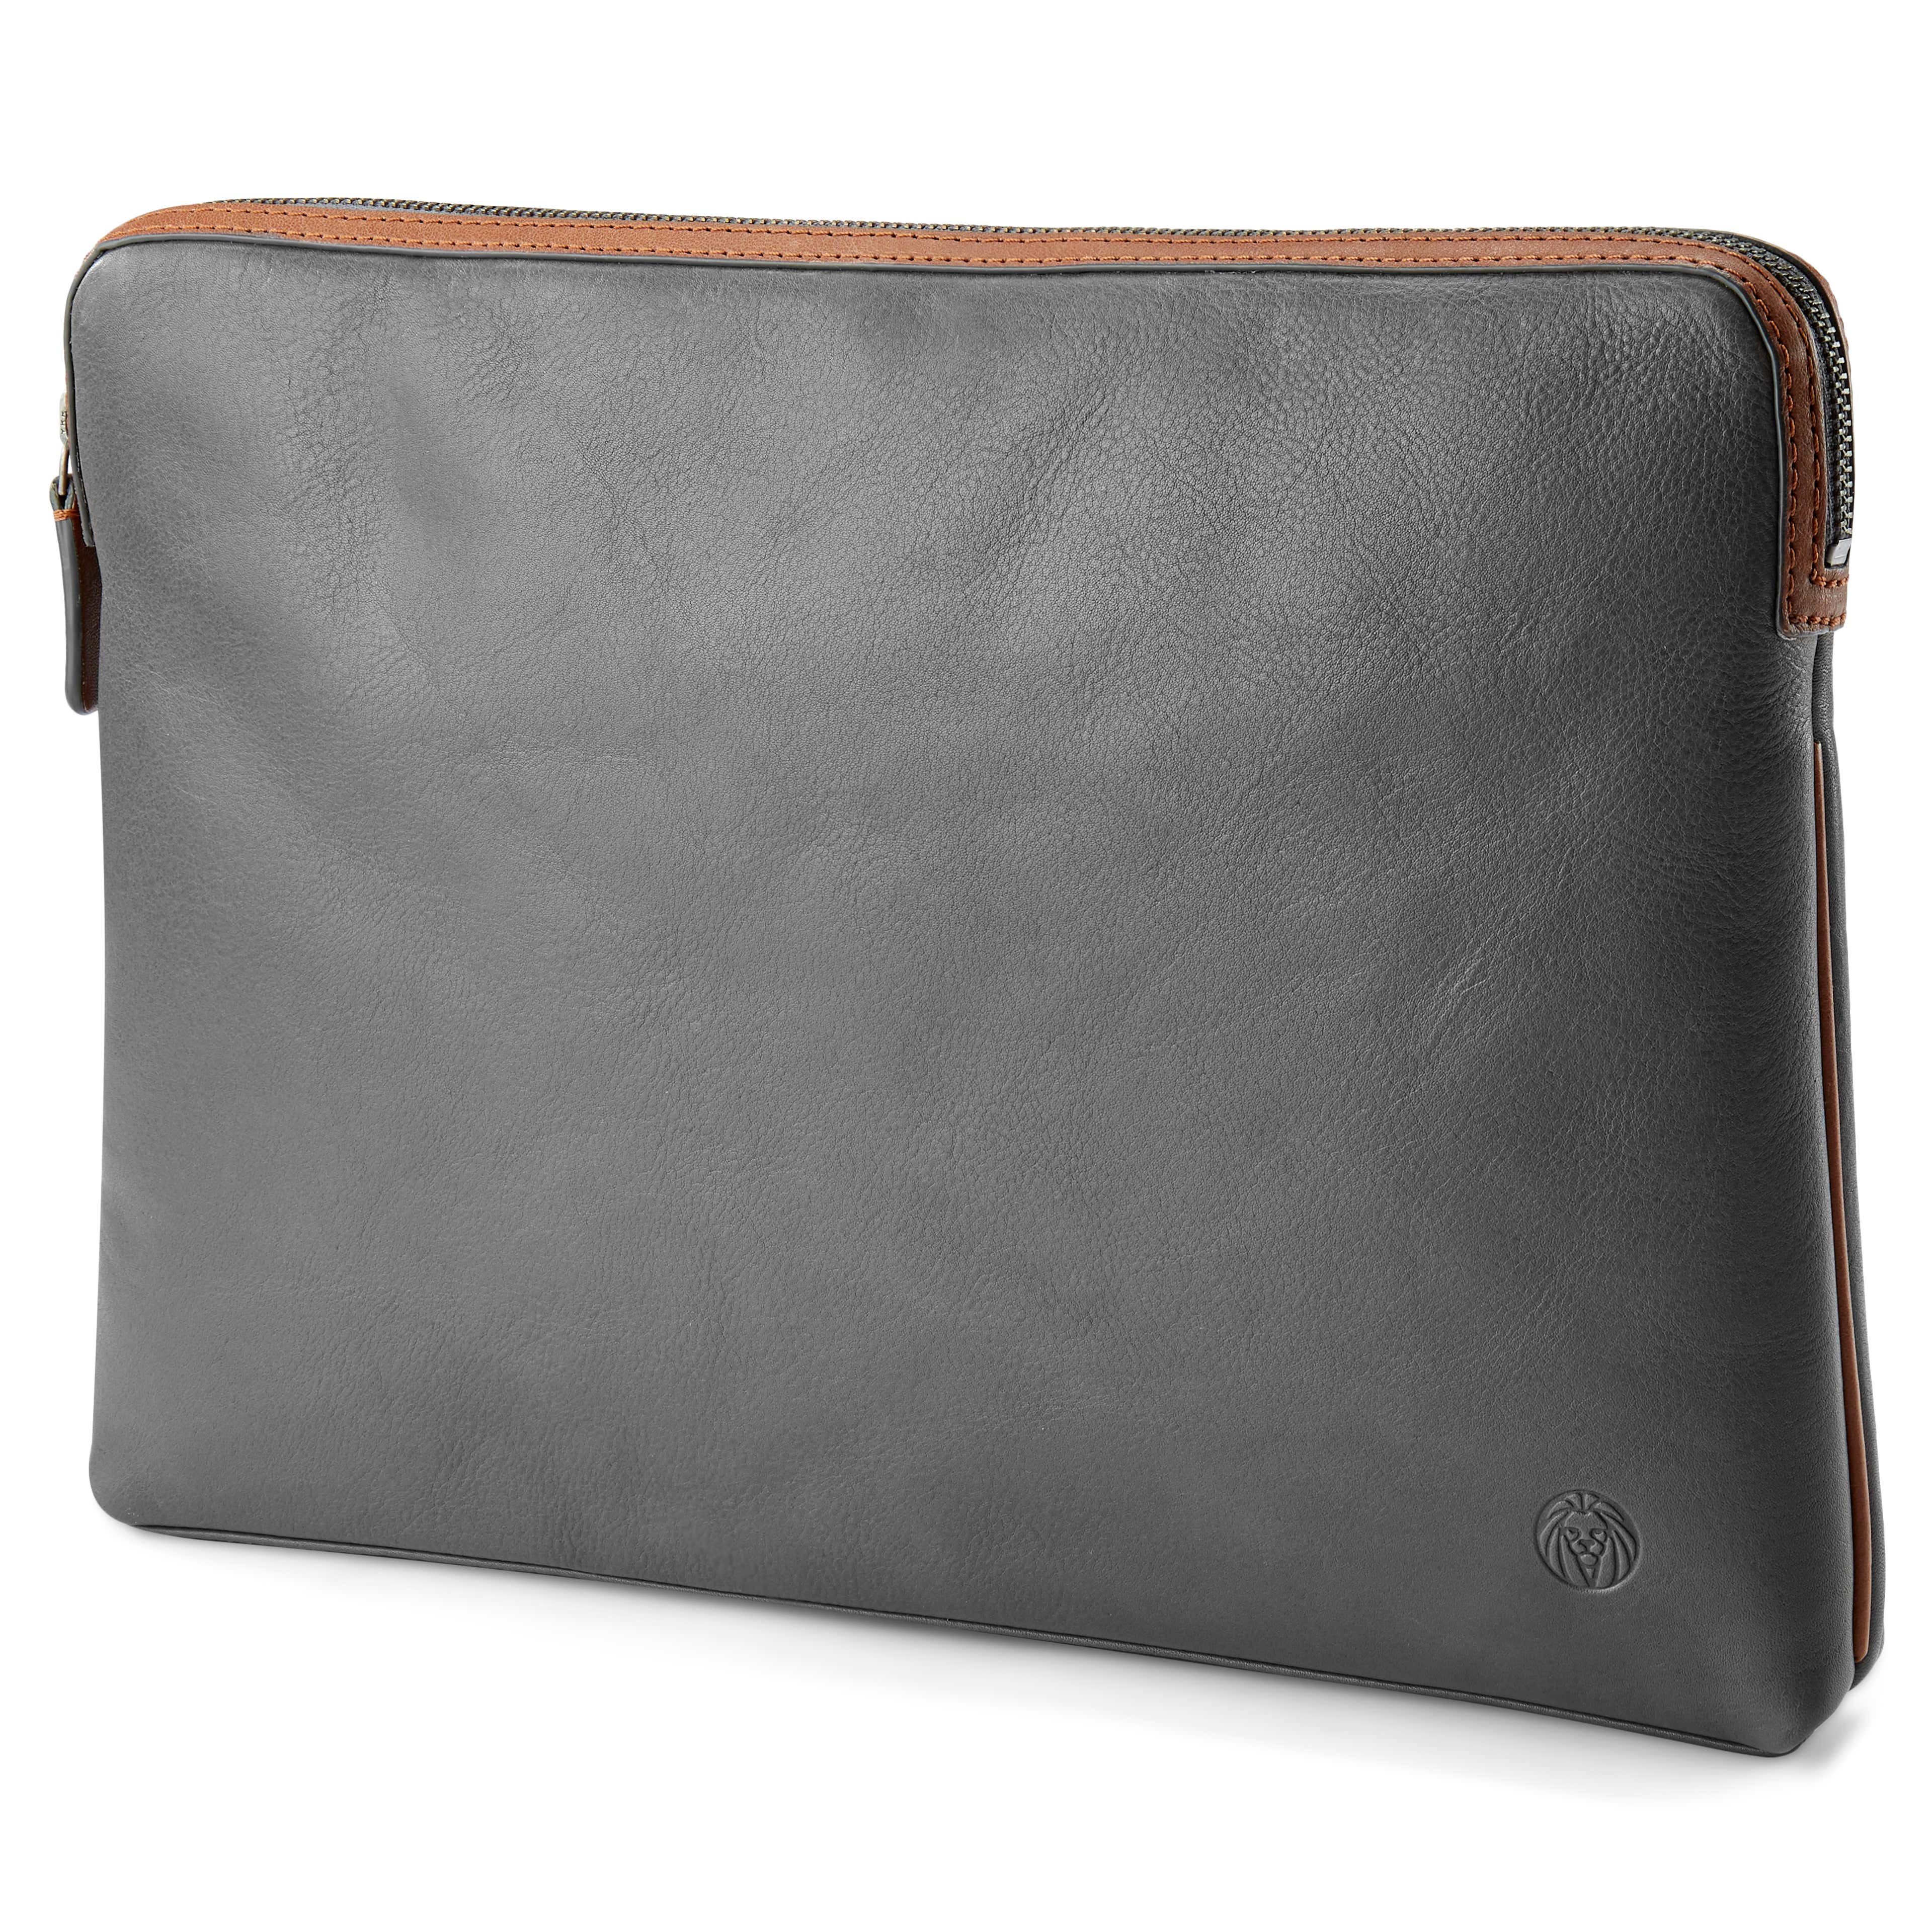 Lou Grey & Tan Leather Laptop Sleeve